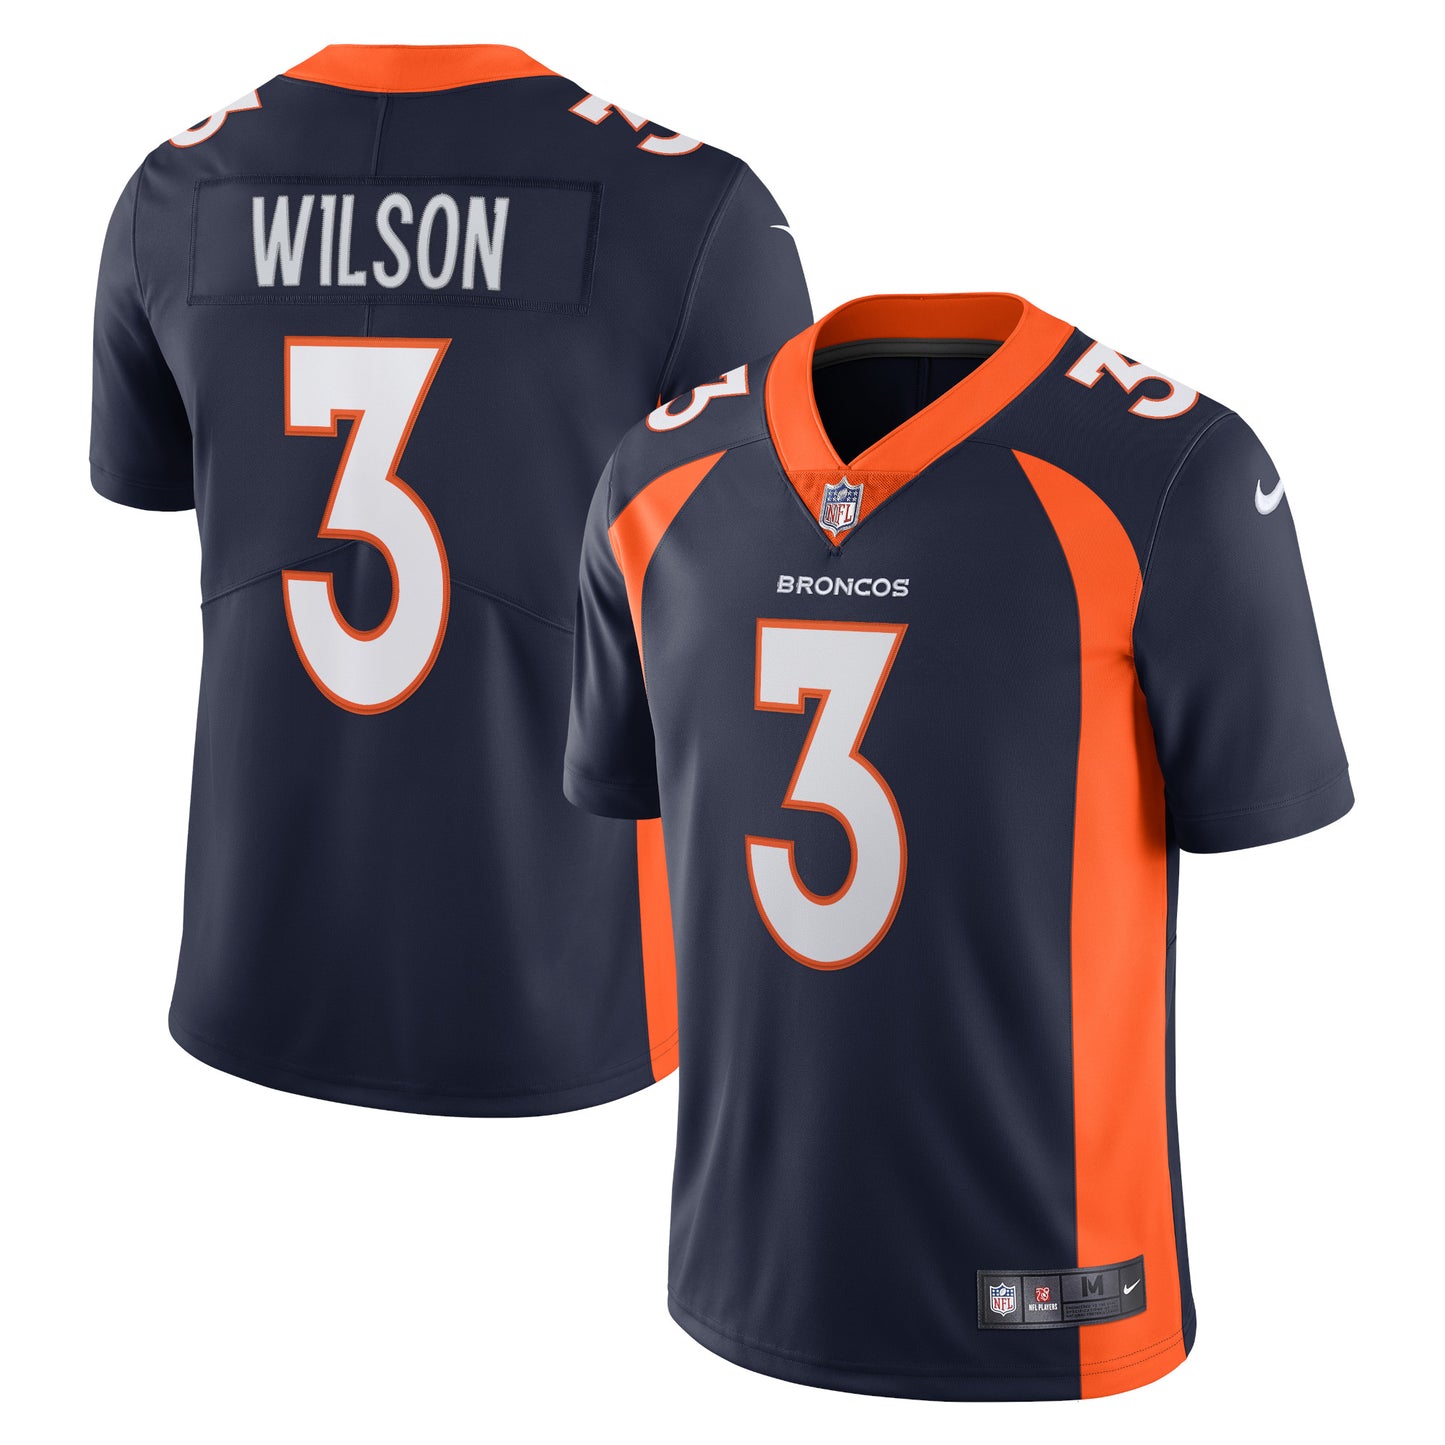 Russell Wilson Denver Broncos Nike Alternate Vapor Limited Jersey - Navy